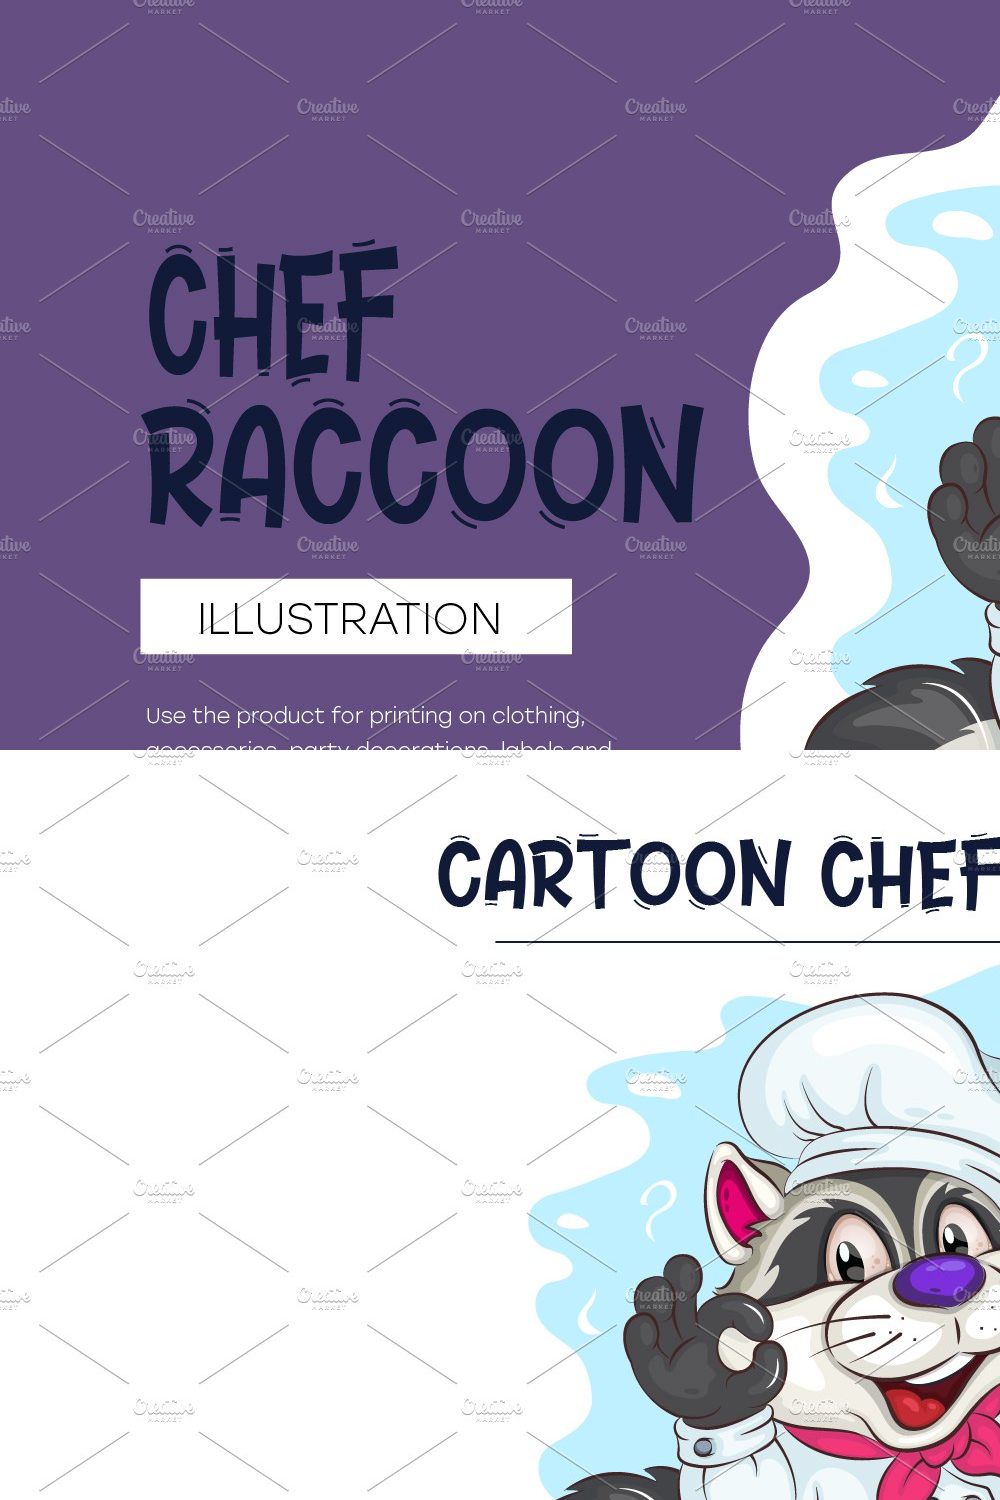 Cartoon Chef Raccoon. T-Shirt, SVG. pinterest preview image.